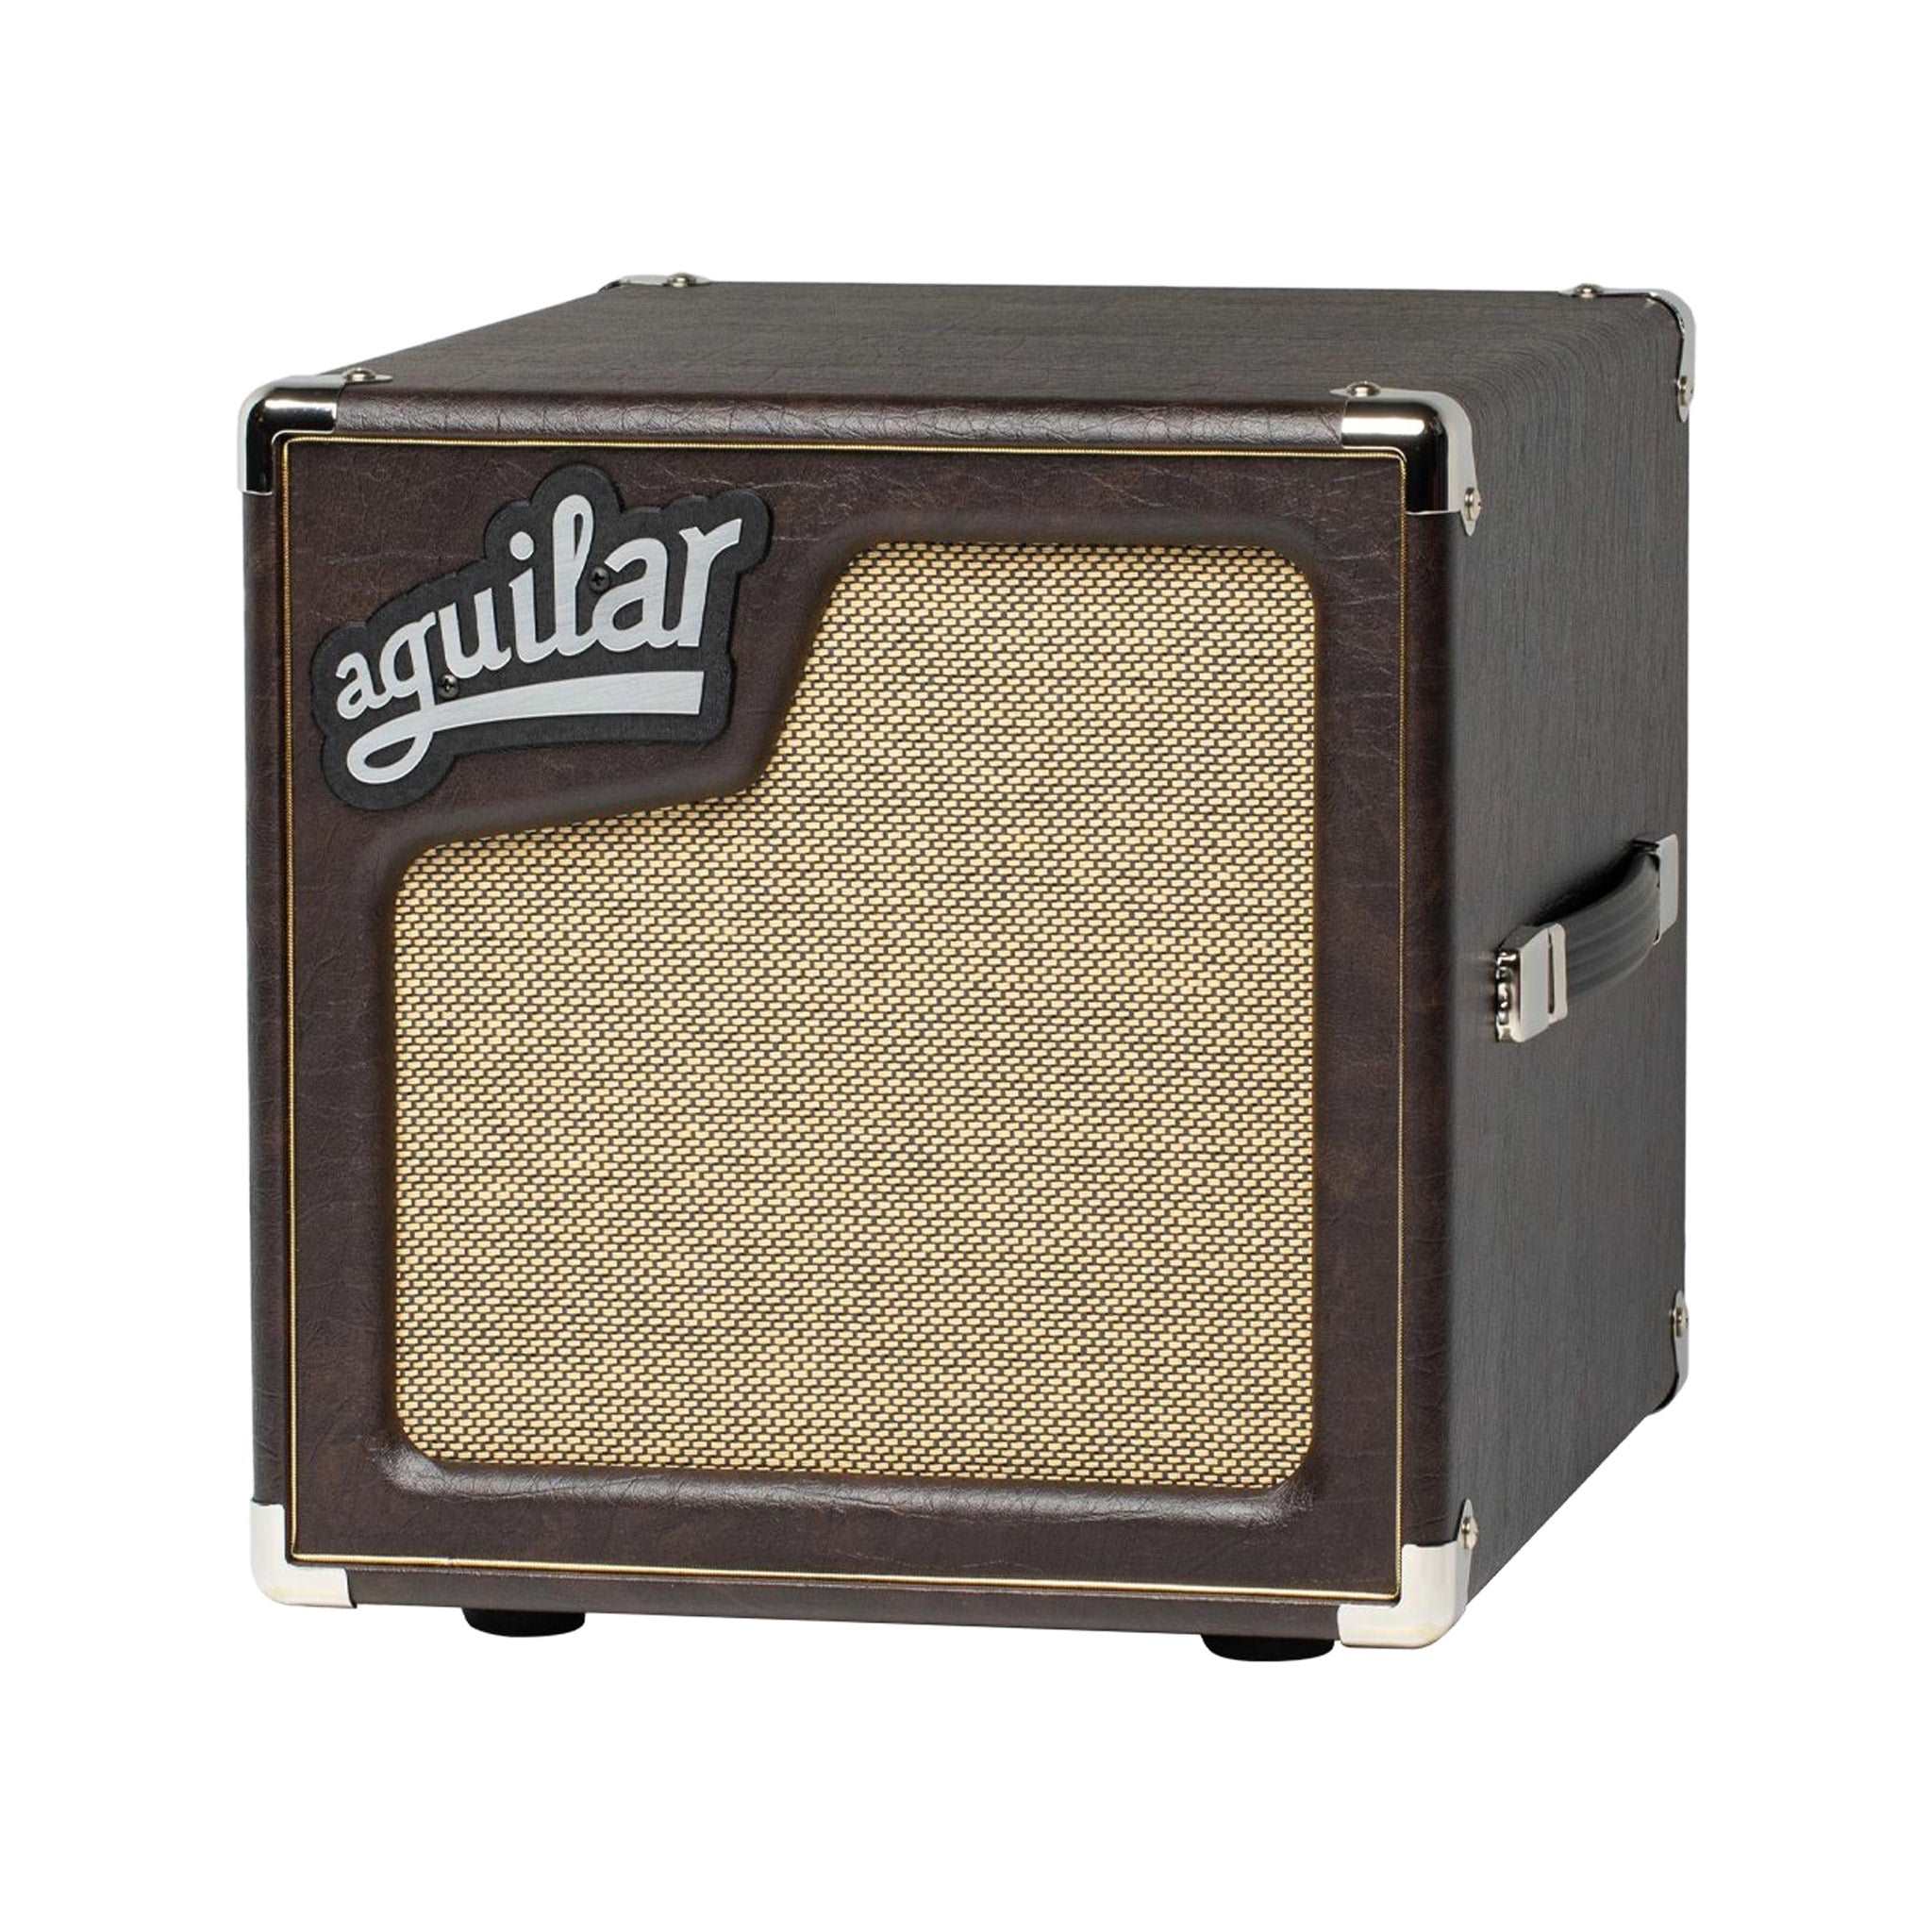 Aguilar SL 110 Lightweight/Hybrid Bass Speaker Cabinet, 8 ohm, Chocolate Brown | Zoso Music Sdn Bhd